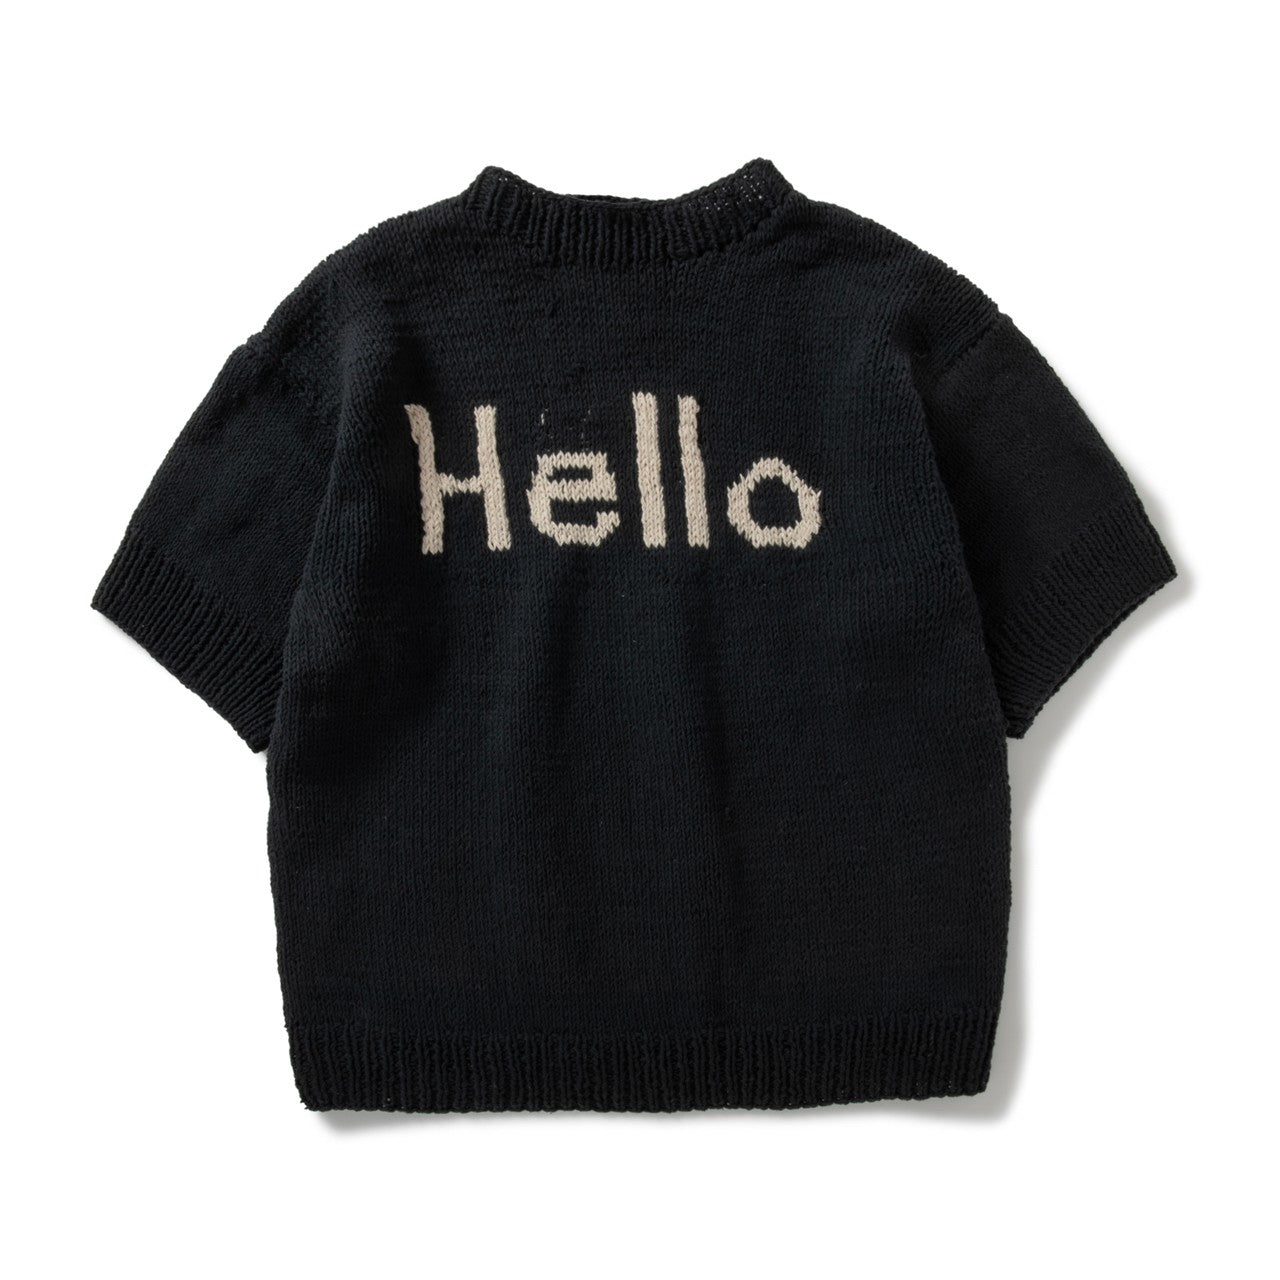 MacMahon Knitting Mills / Crew Neck Knit - Hello